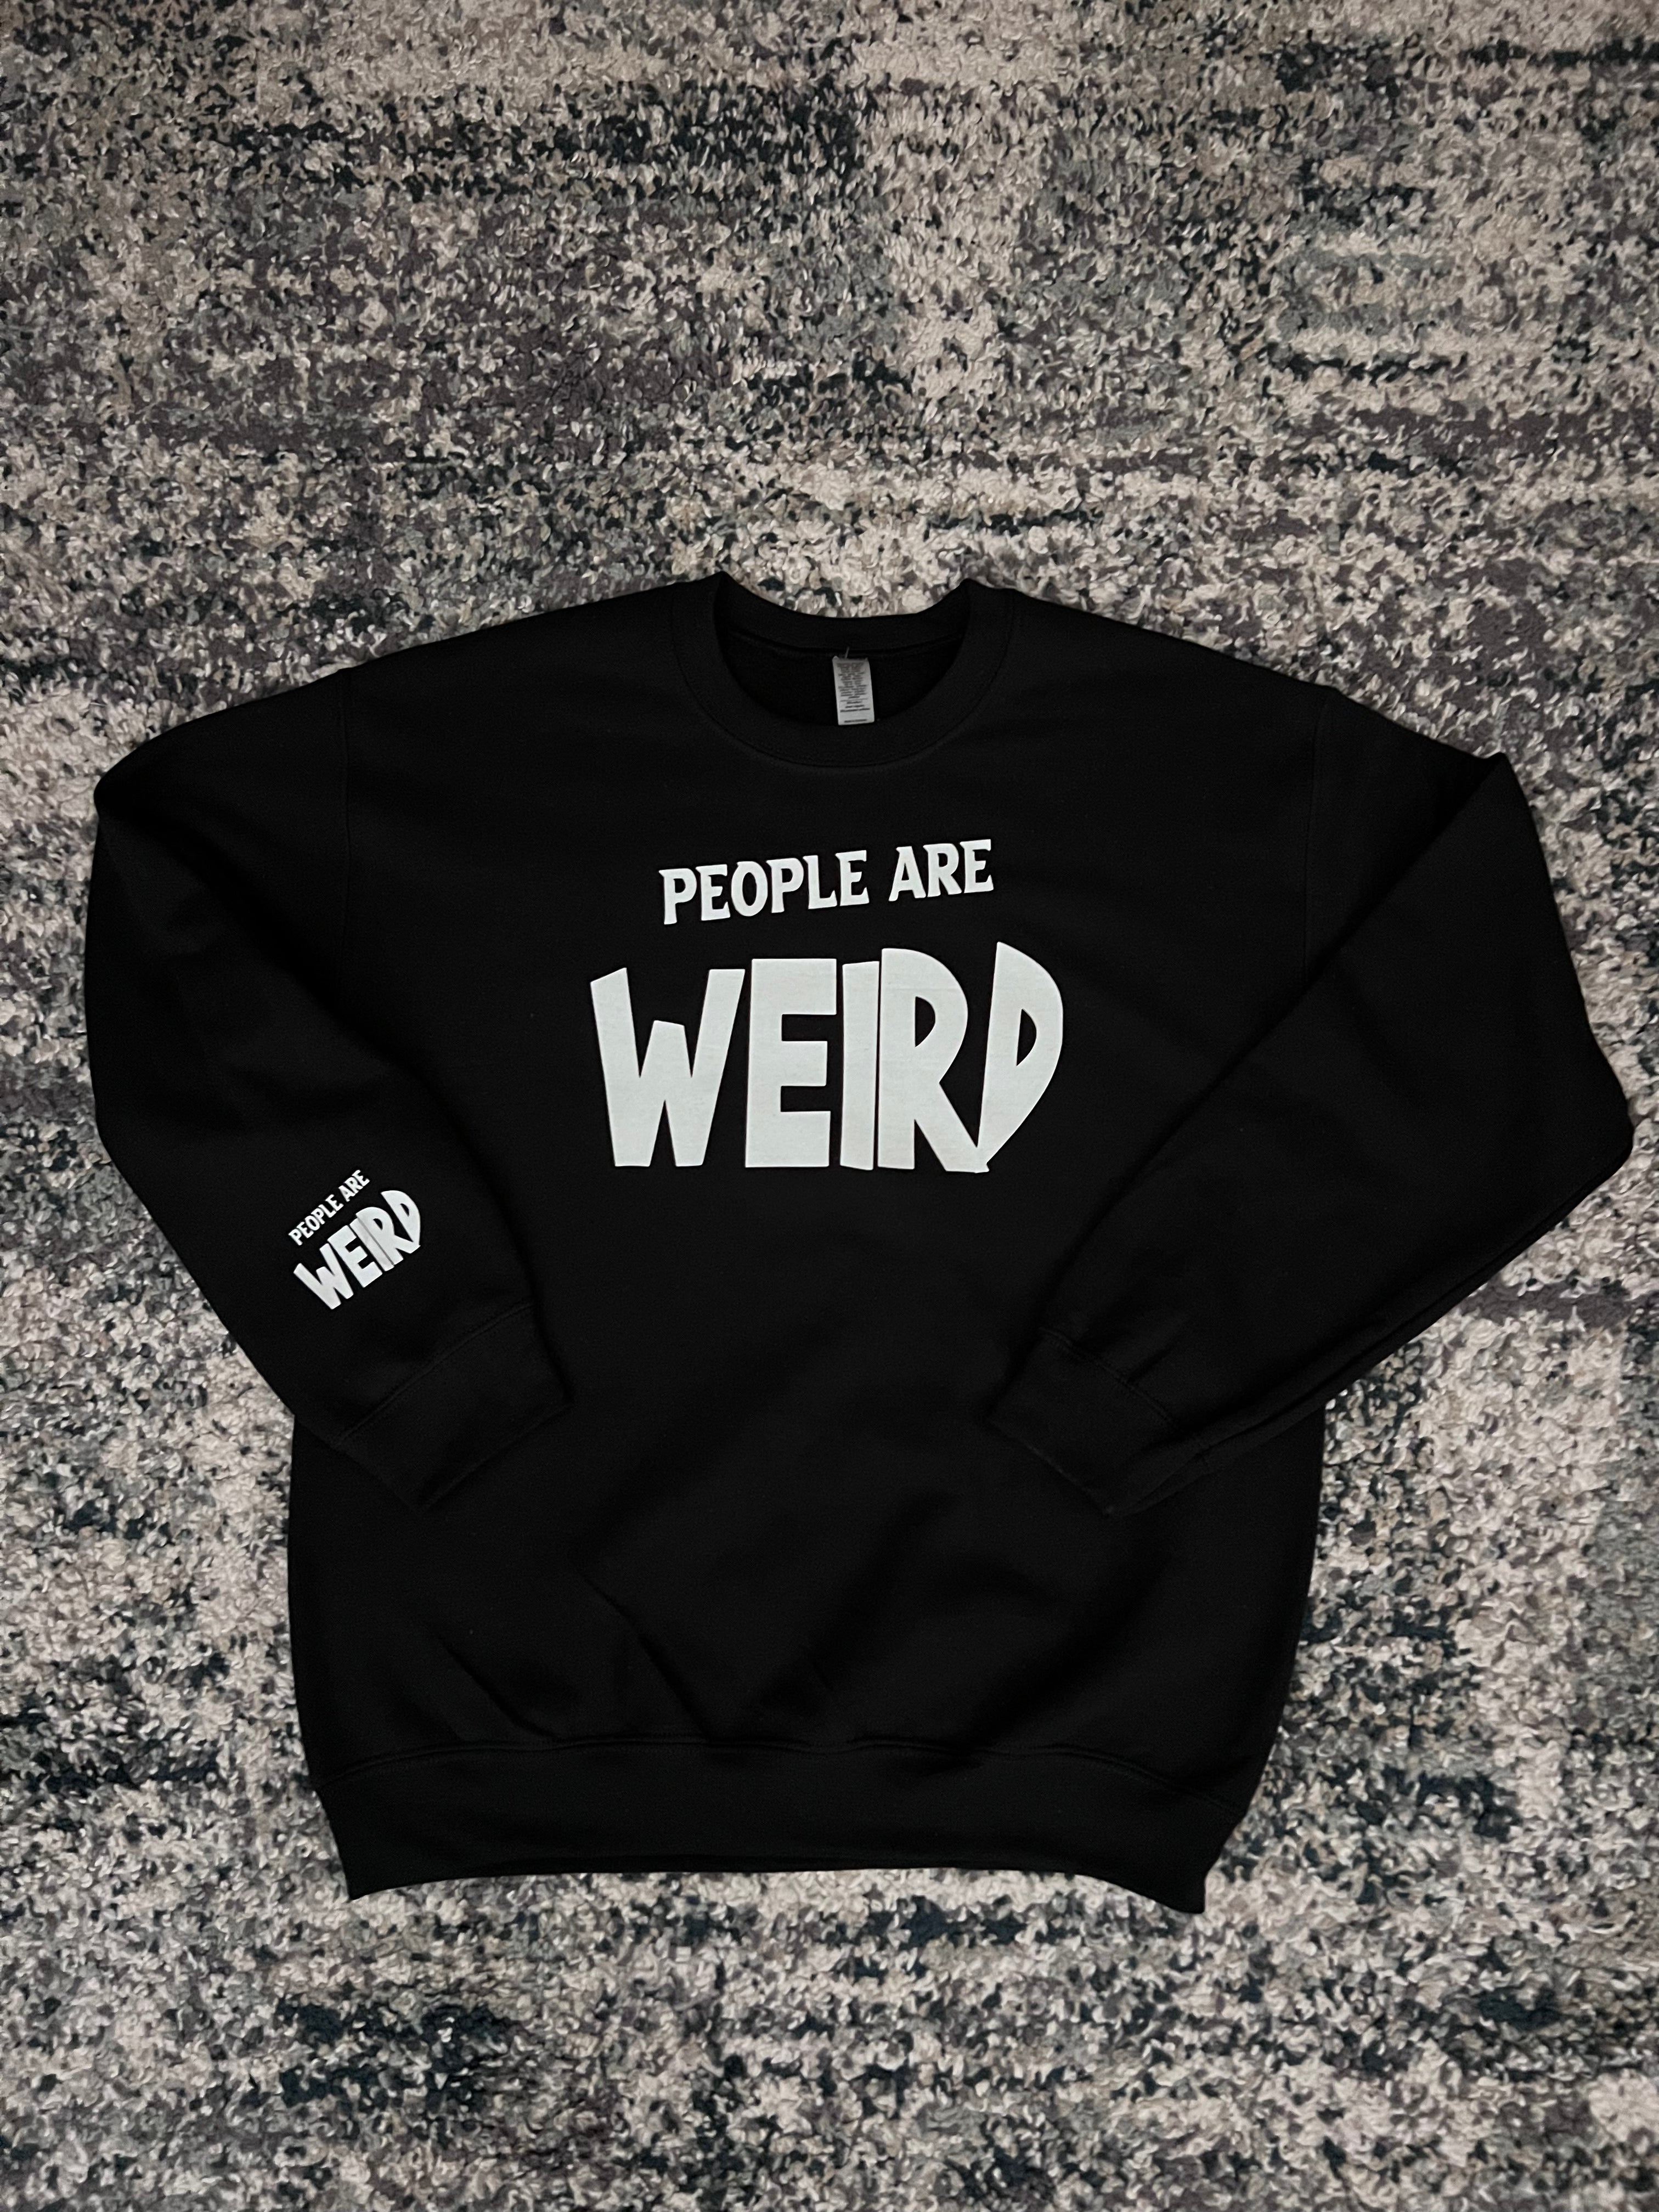 “People are Weird” Crewneck.